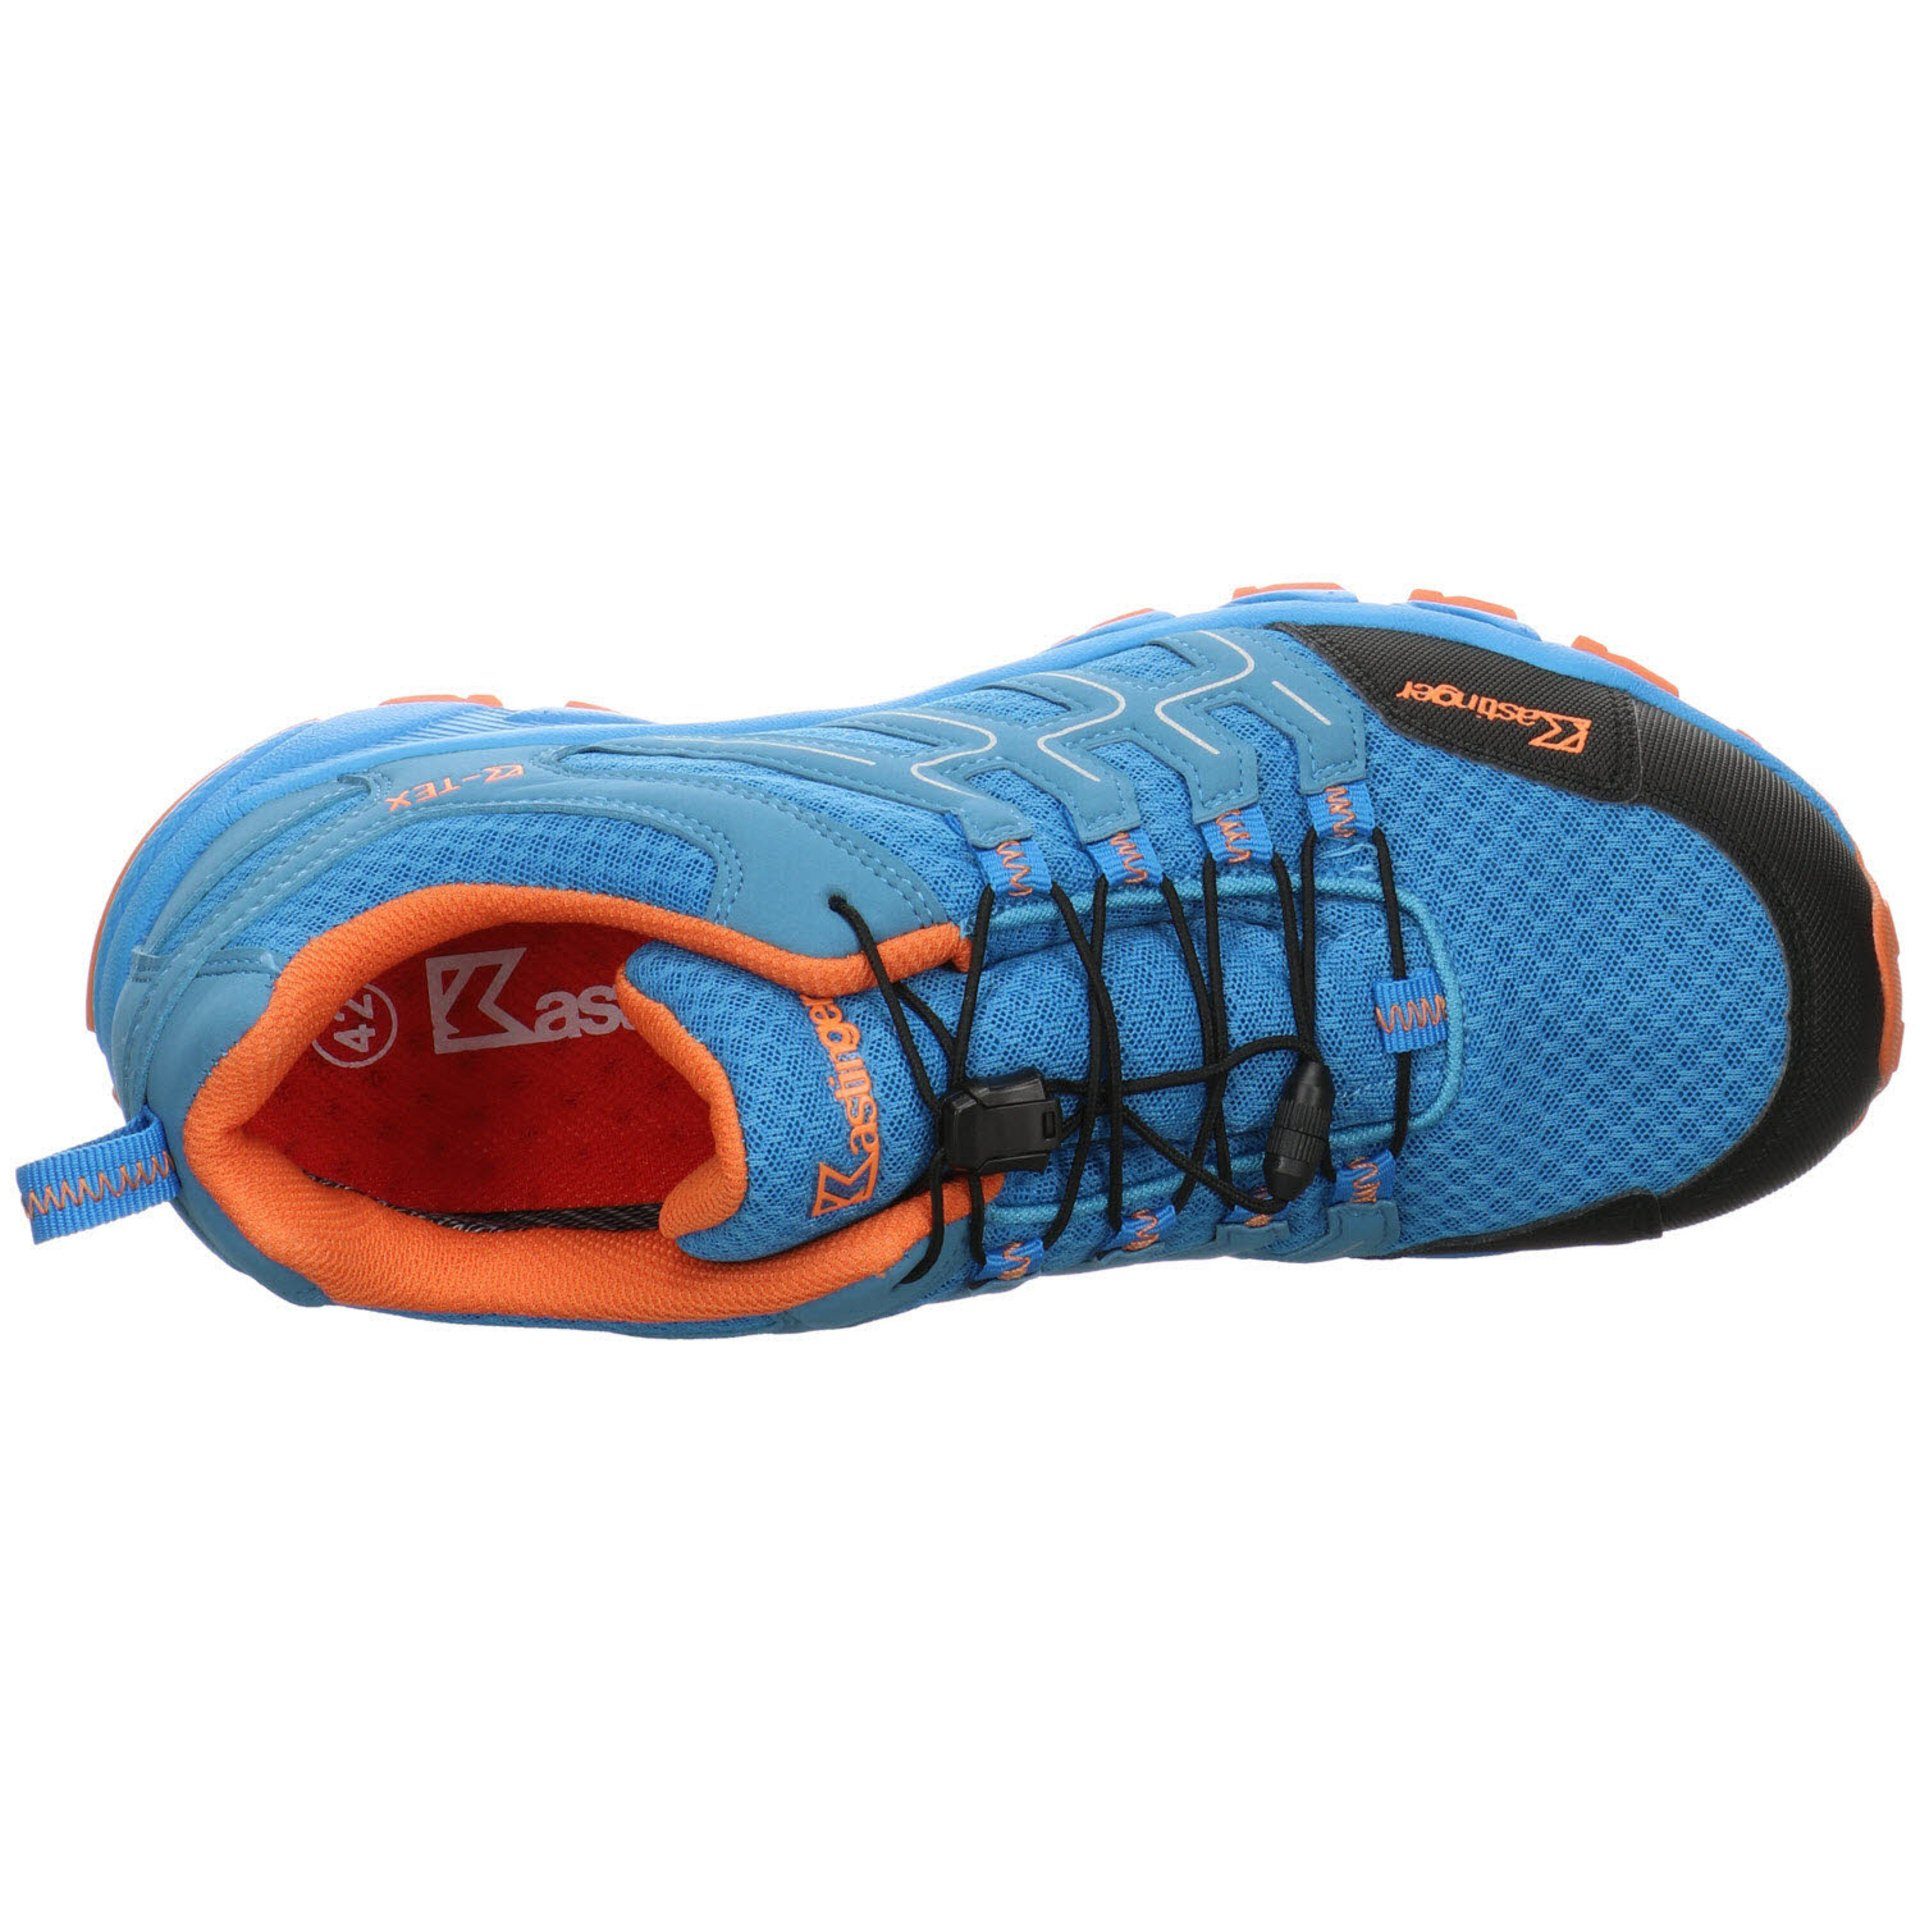 Damen Synthetikkombination Kastinger Trailrunner Schuhe Outdoorschuh Outdoor Outdoorschuh blue/orange